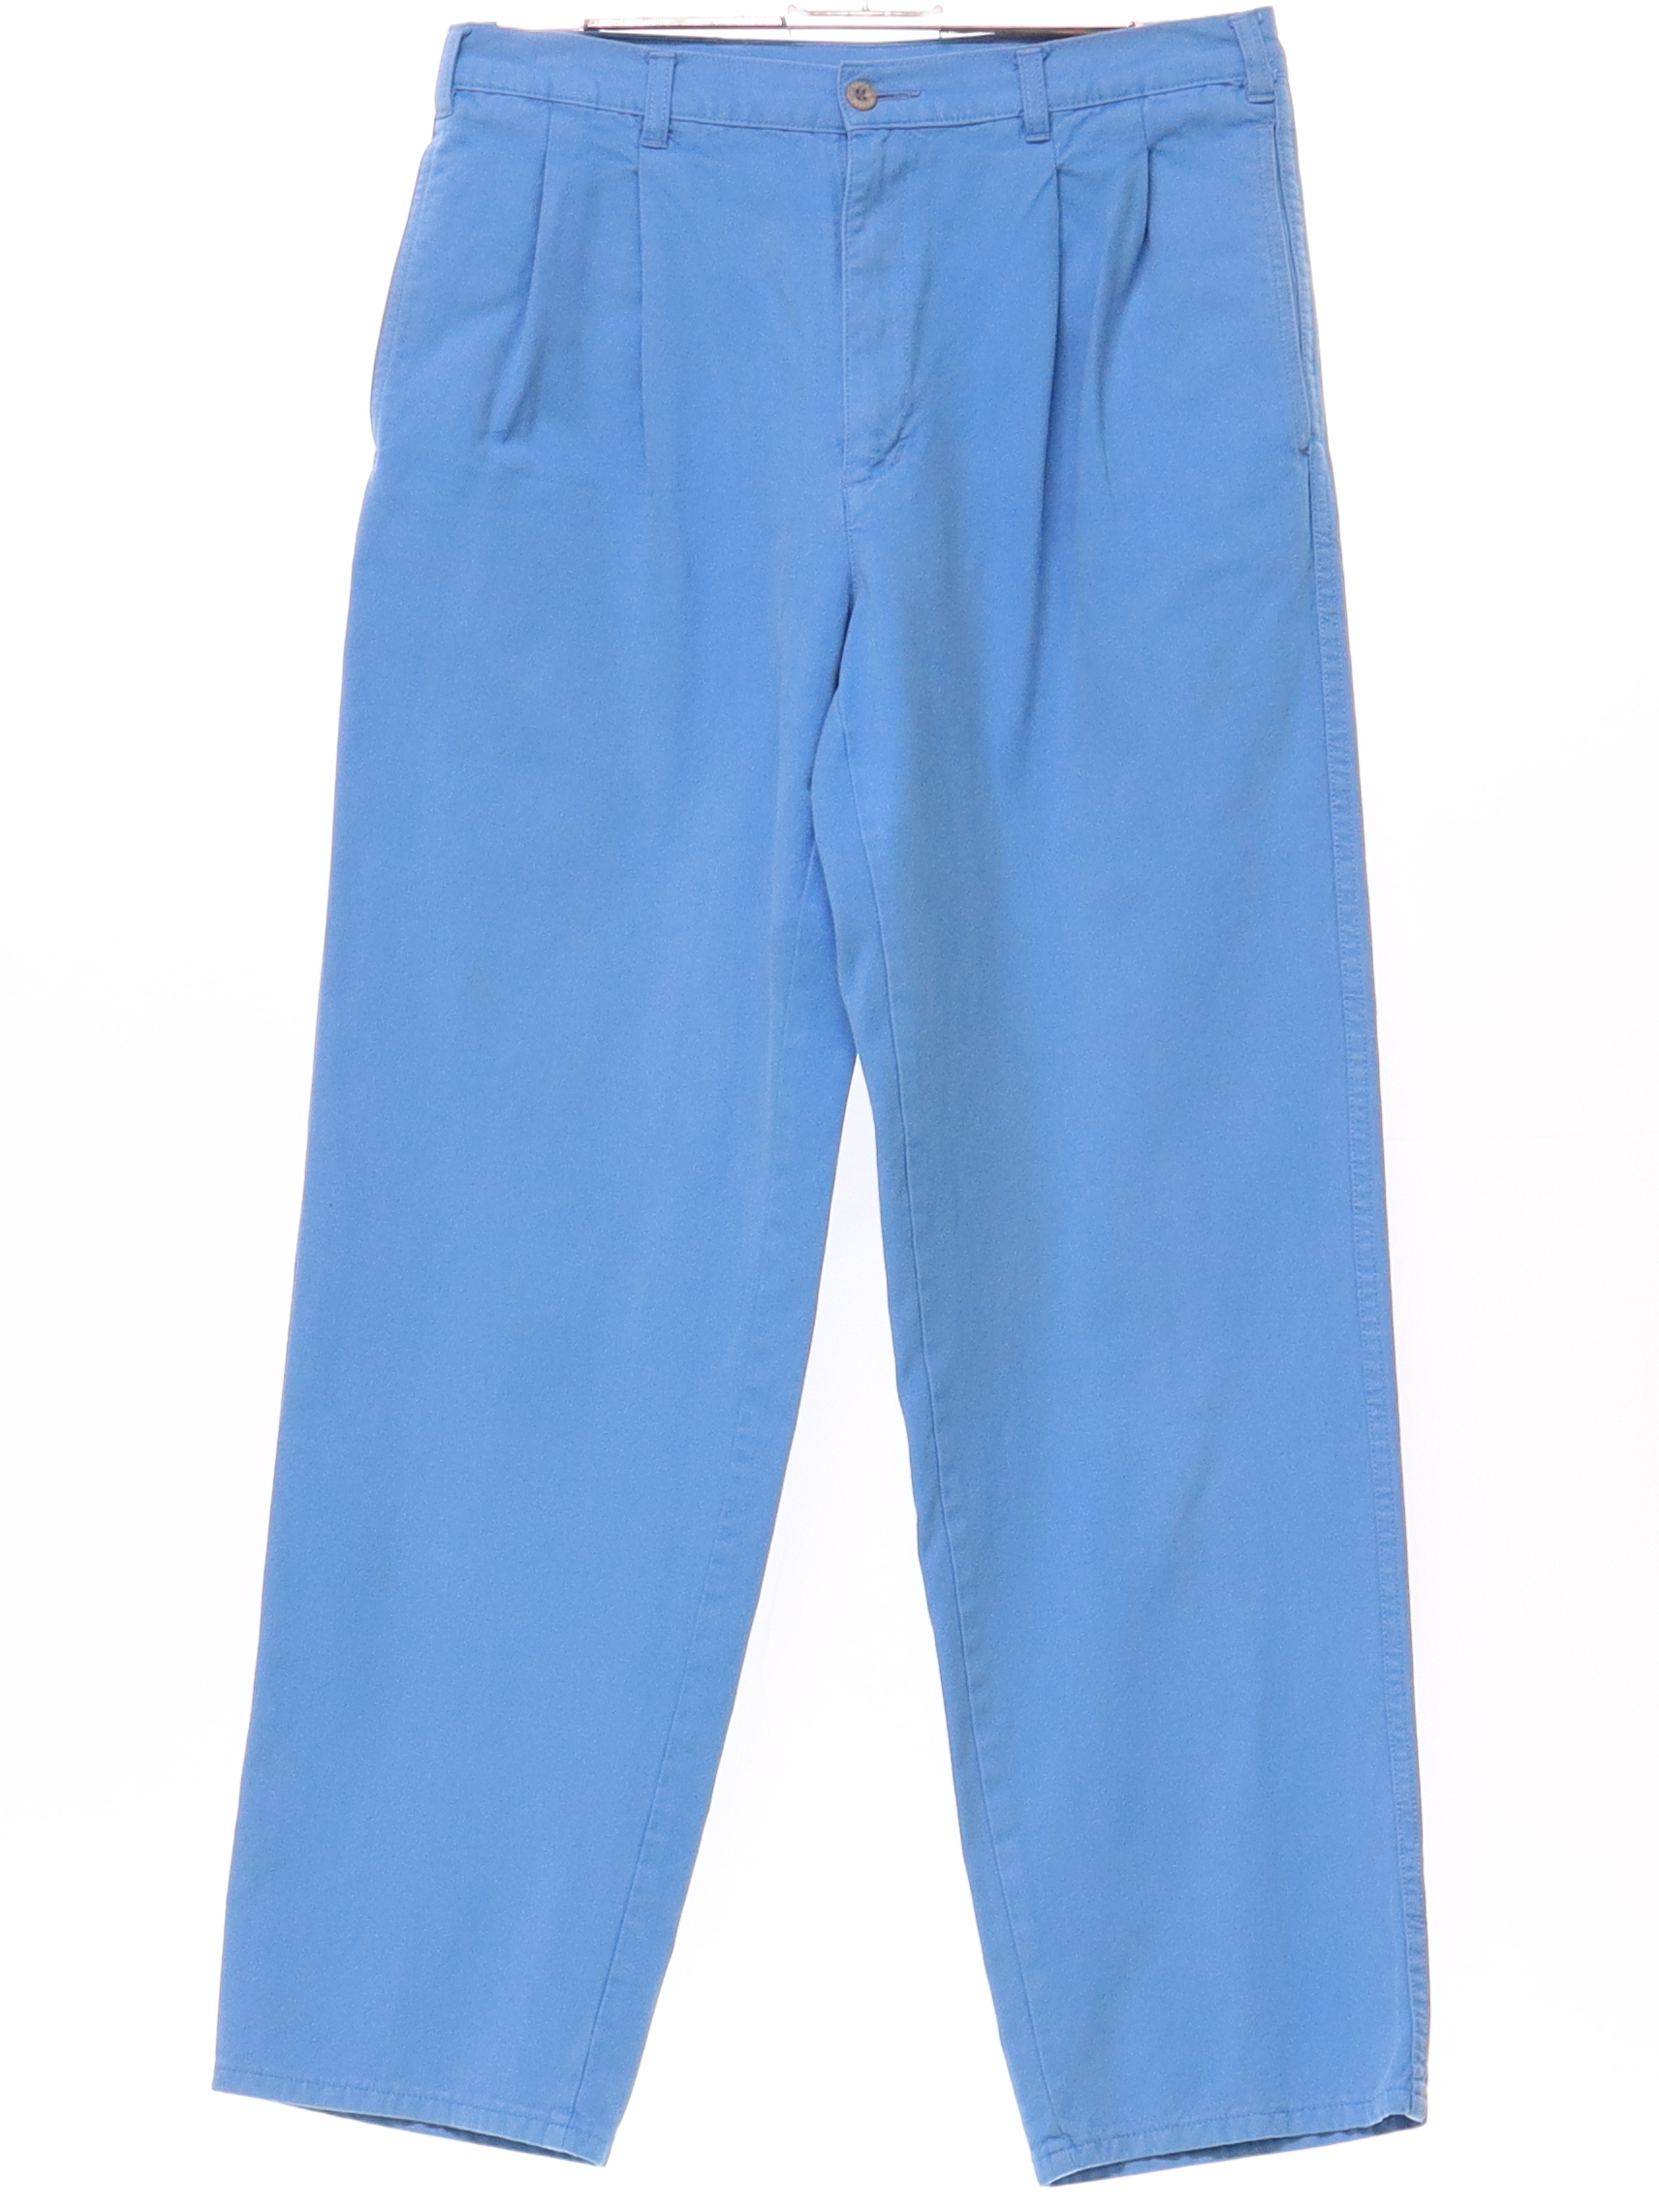 80s Vintage Dockers Pants: 80s -Dockers- Mens sky blue solid colored ...